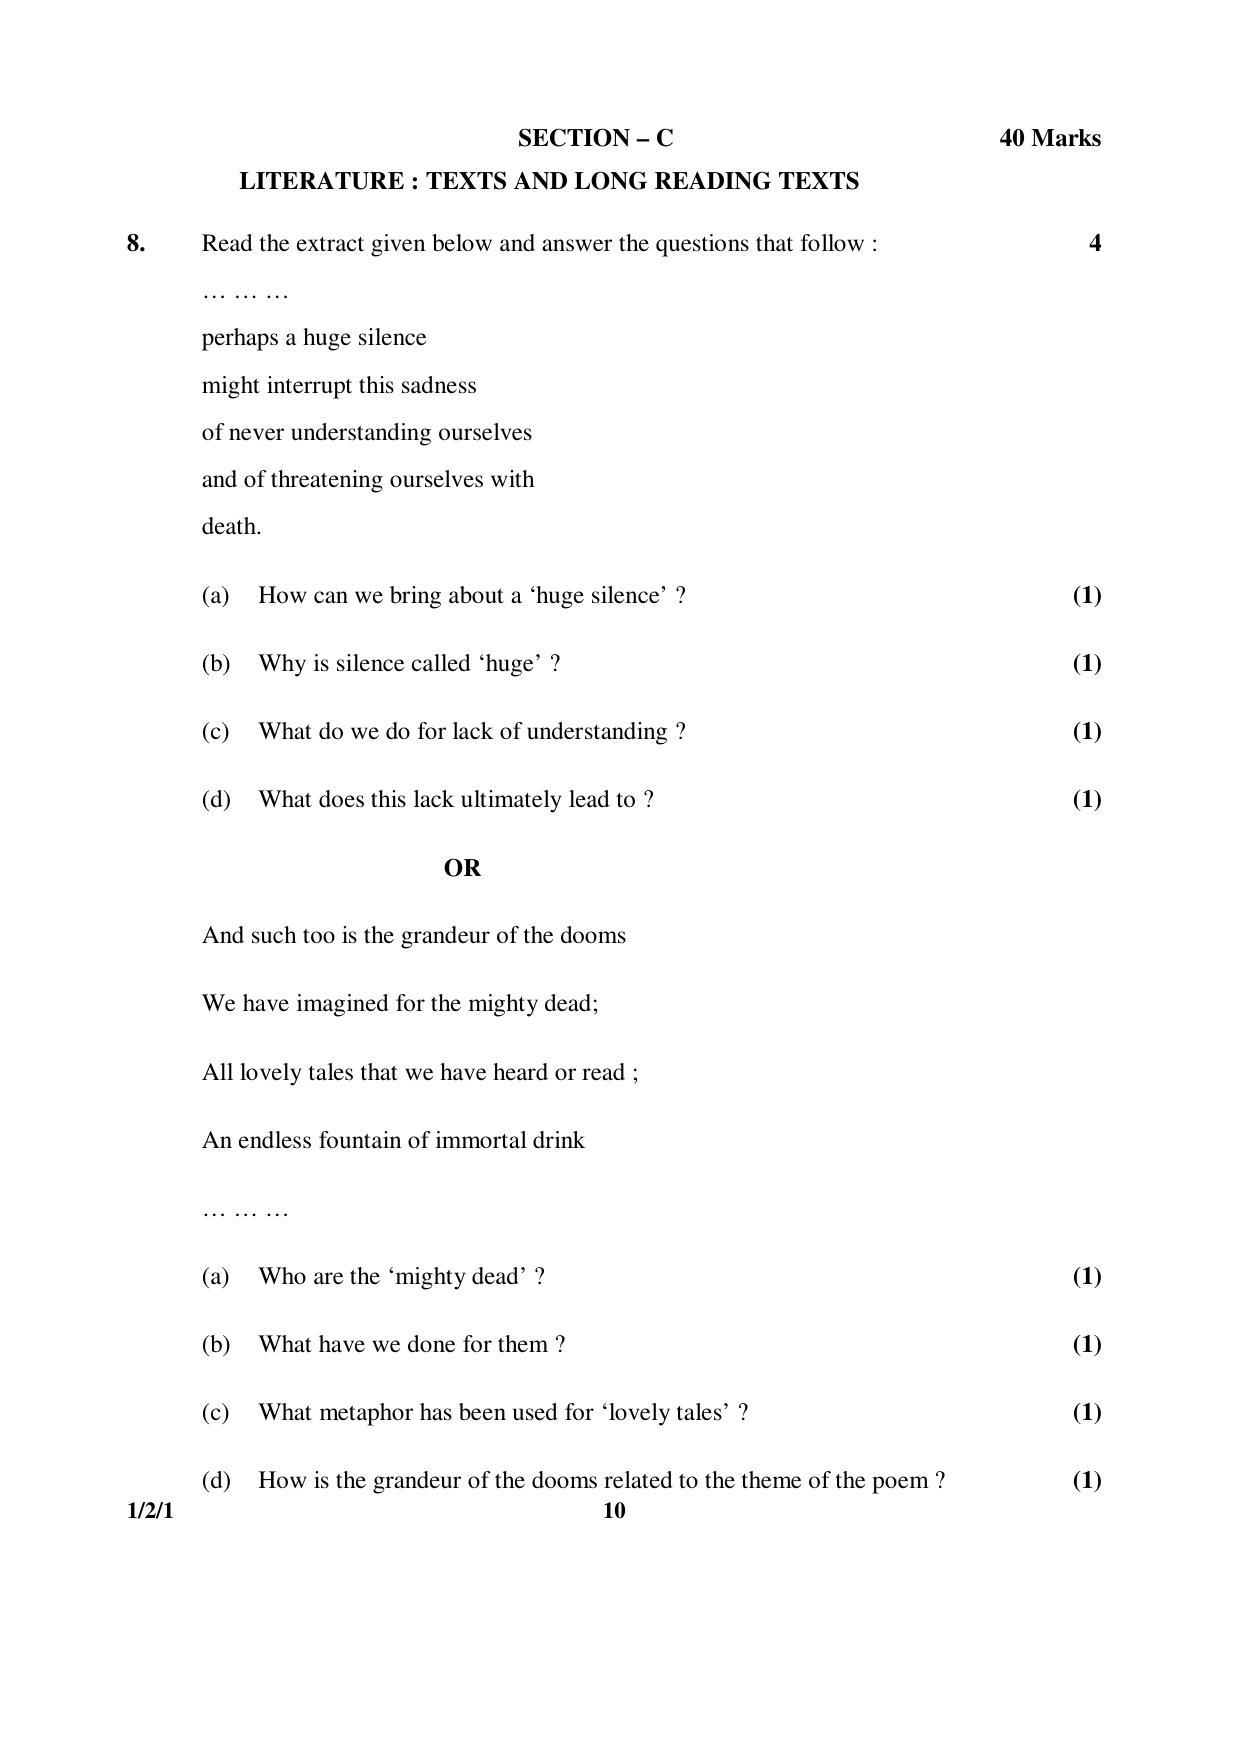 CBSE Class 12 1-2-1 ENGLISH CORE 2016 Question Paper - Page 10